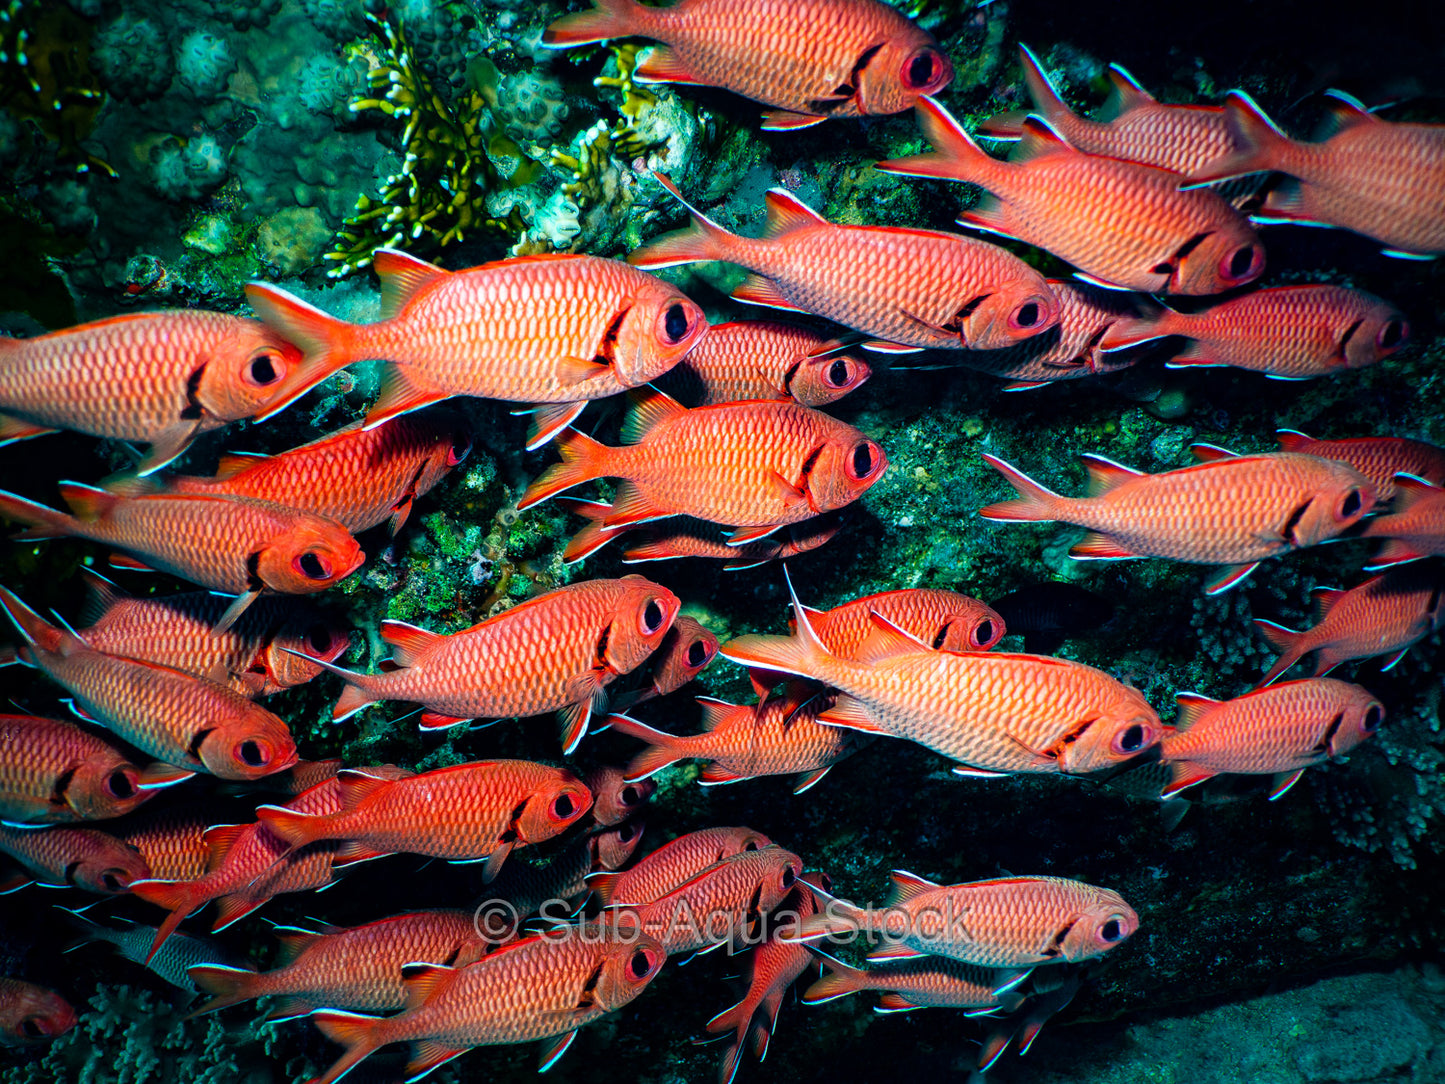 A school of red soldierfish (Myripristis murdjan) sheltering beneath a wreck.